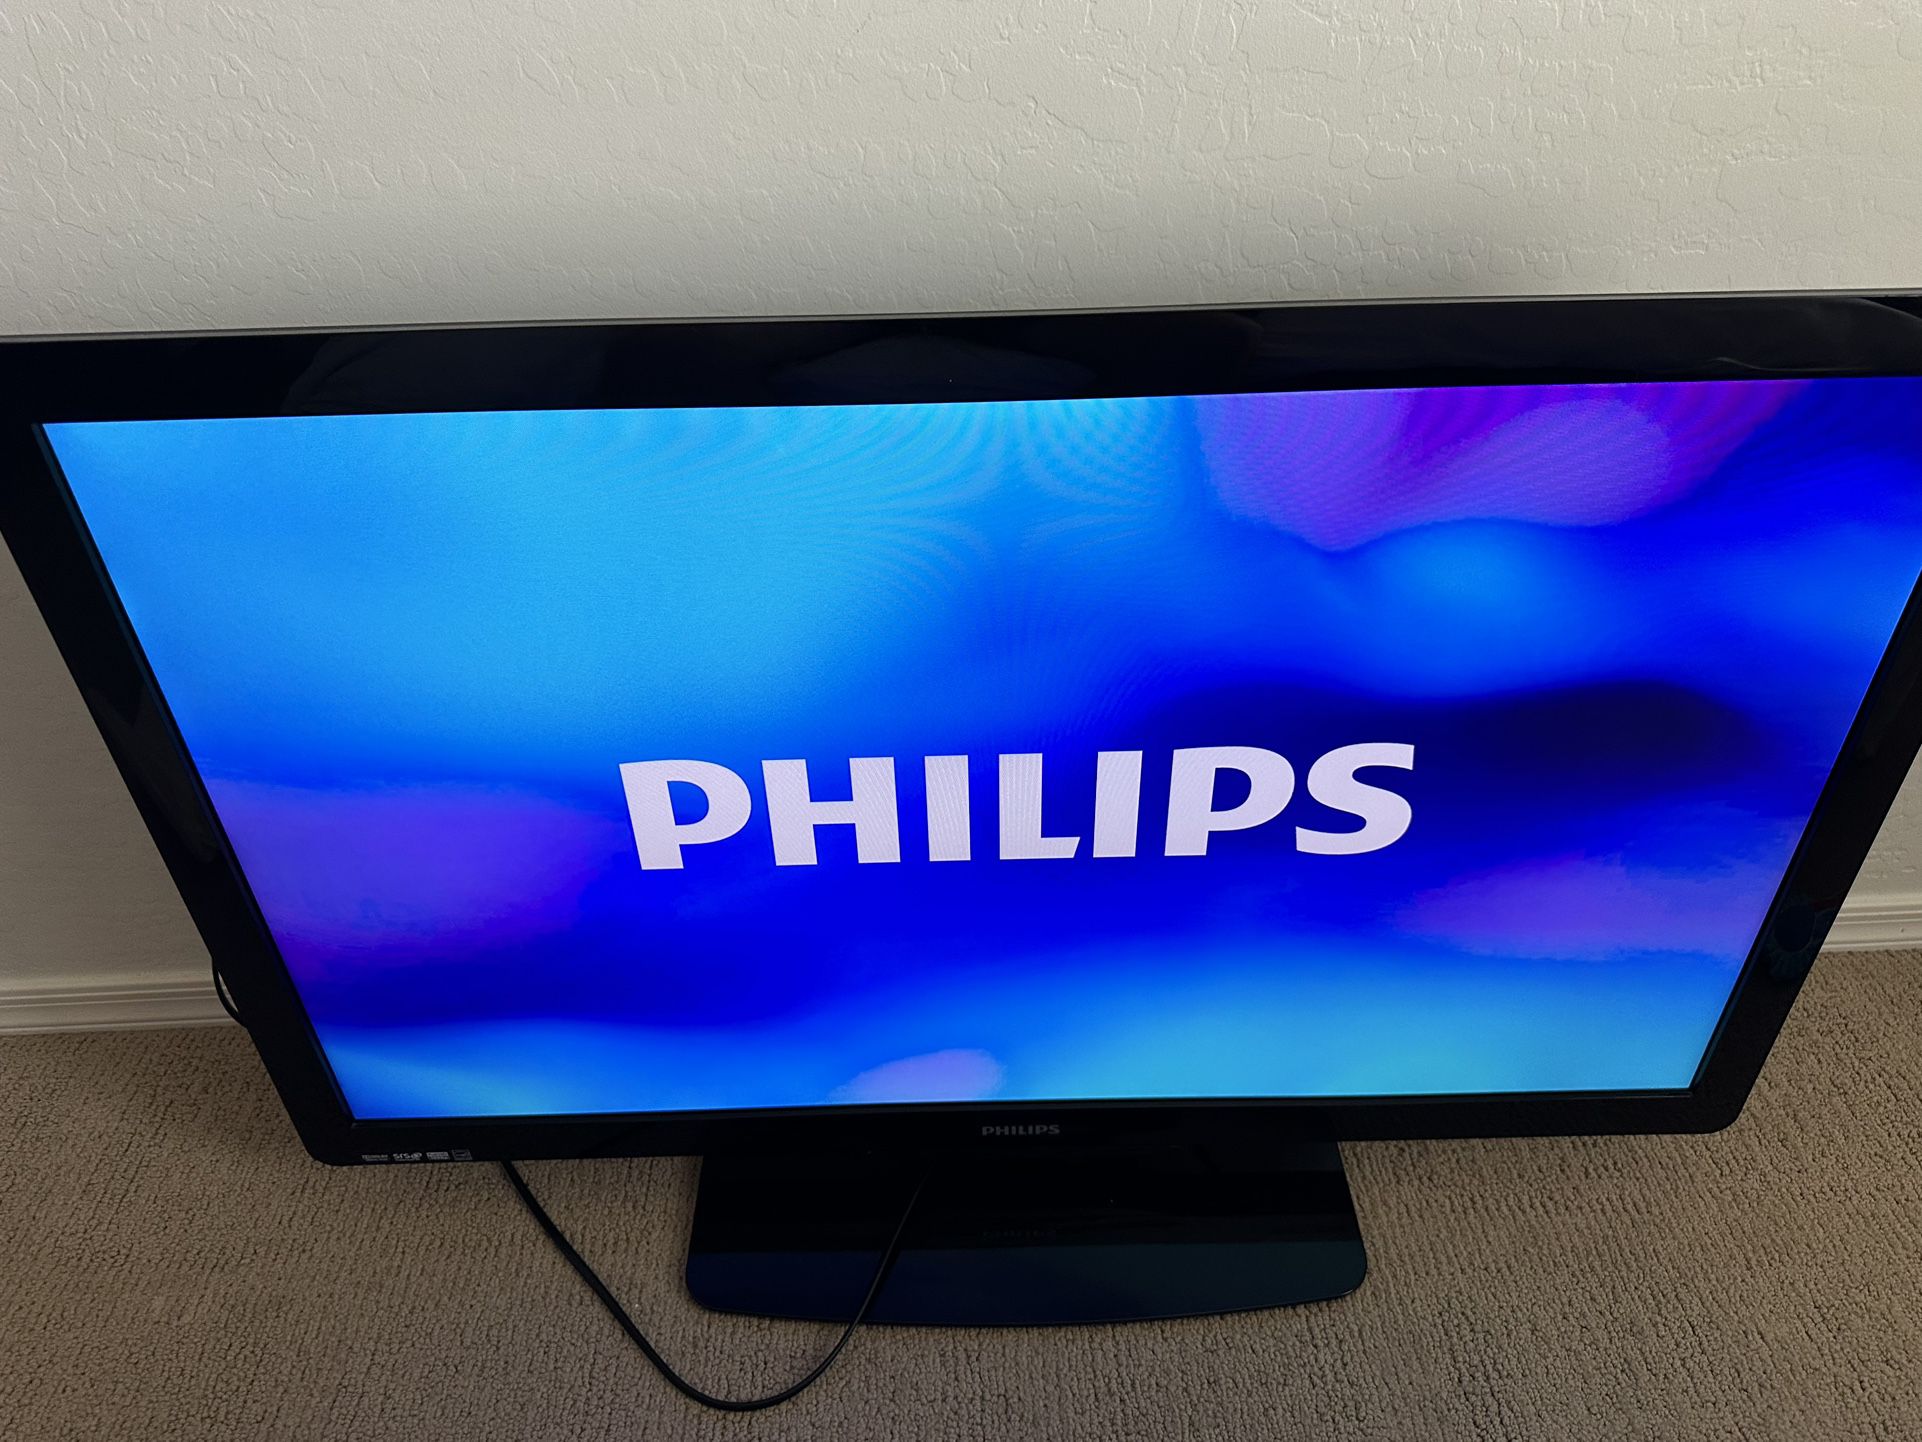 Phillips 40 Inch TV